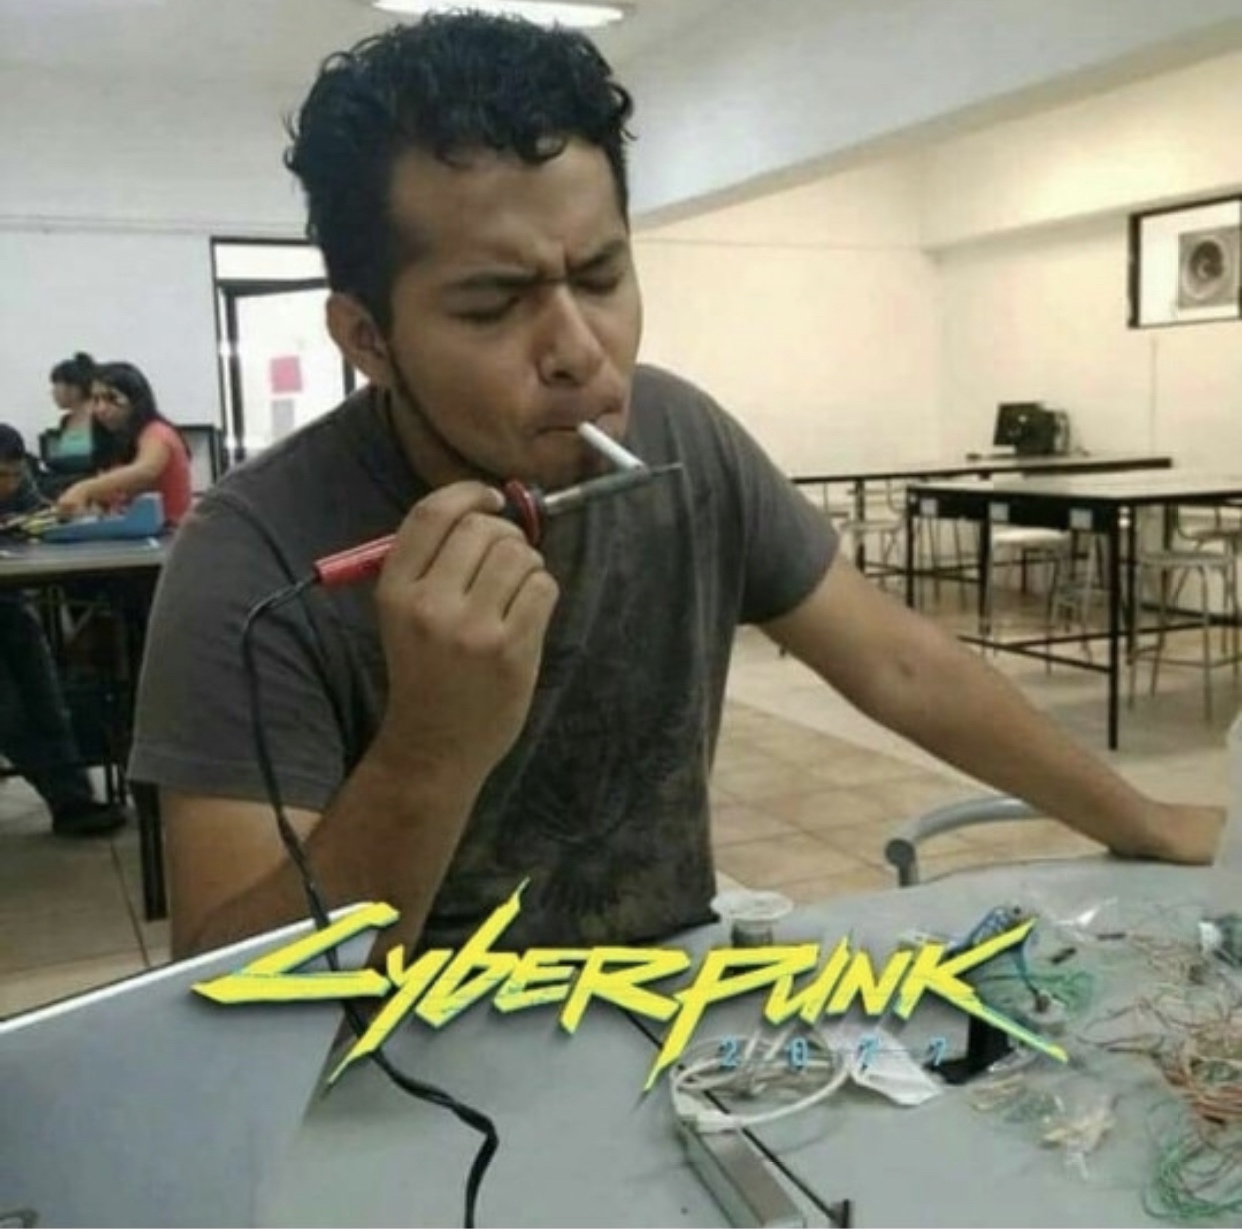 cyberpunk 2077 - man lighting a cigarette with a soldering iron